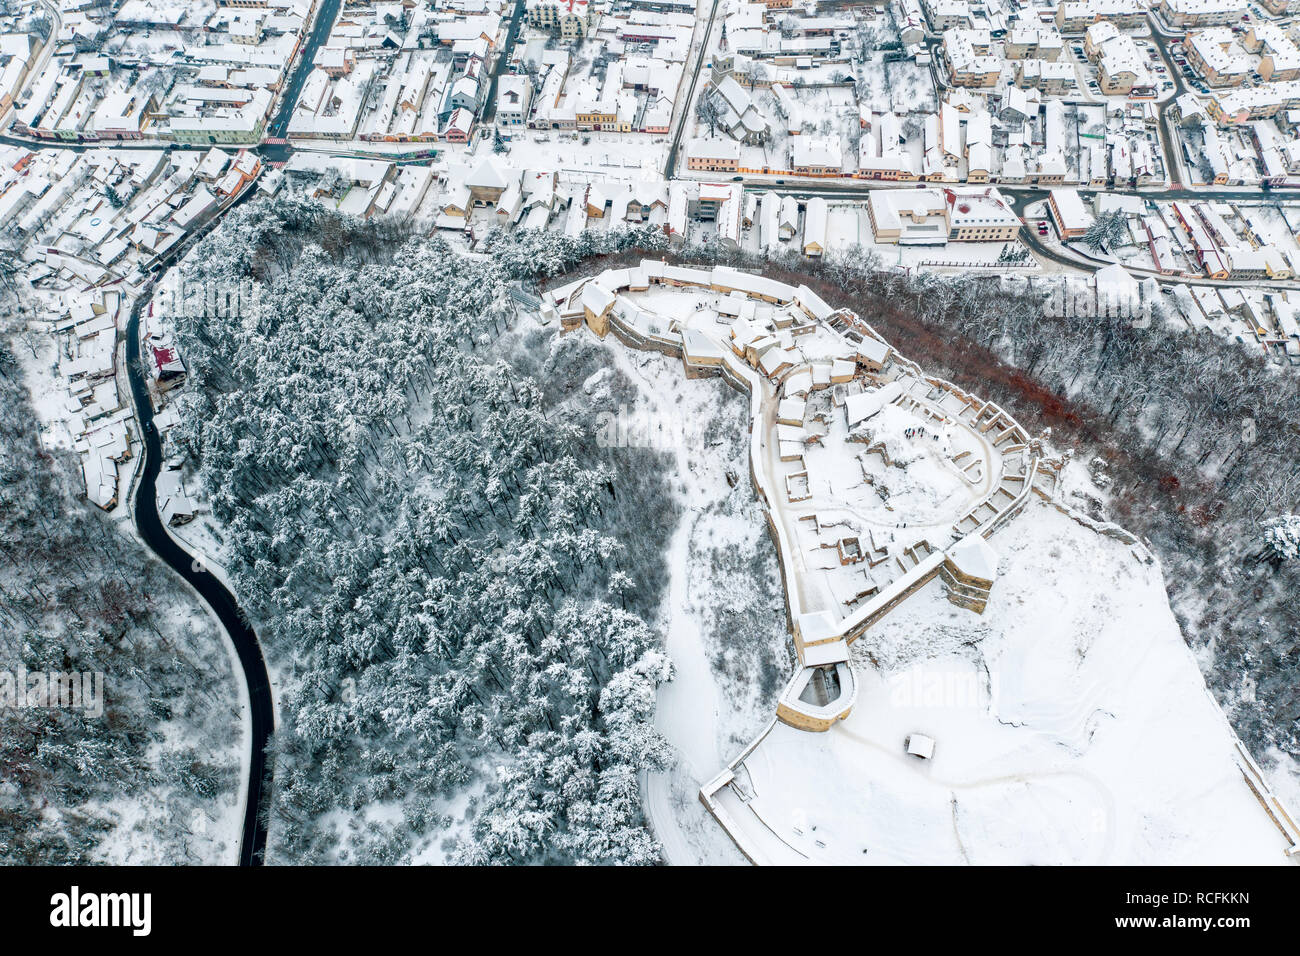 Rasnov Fortress and Rasnov City in winter time covered in snow Stock Photo